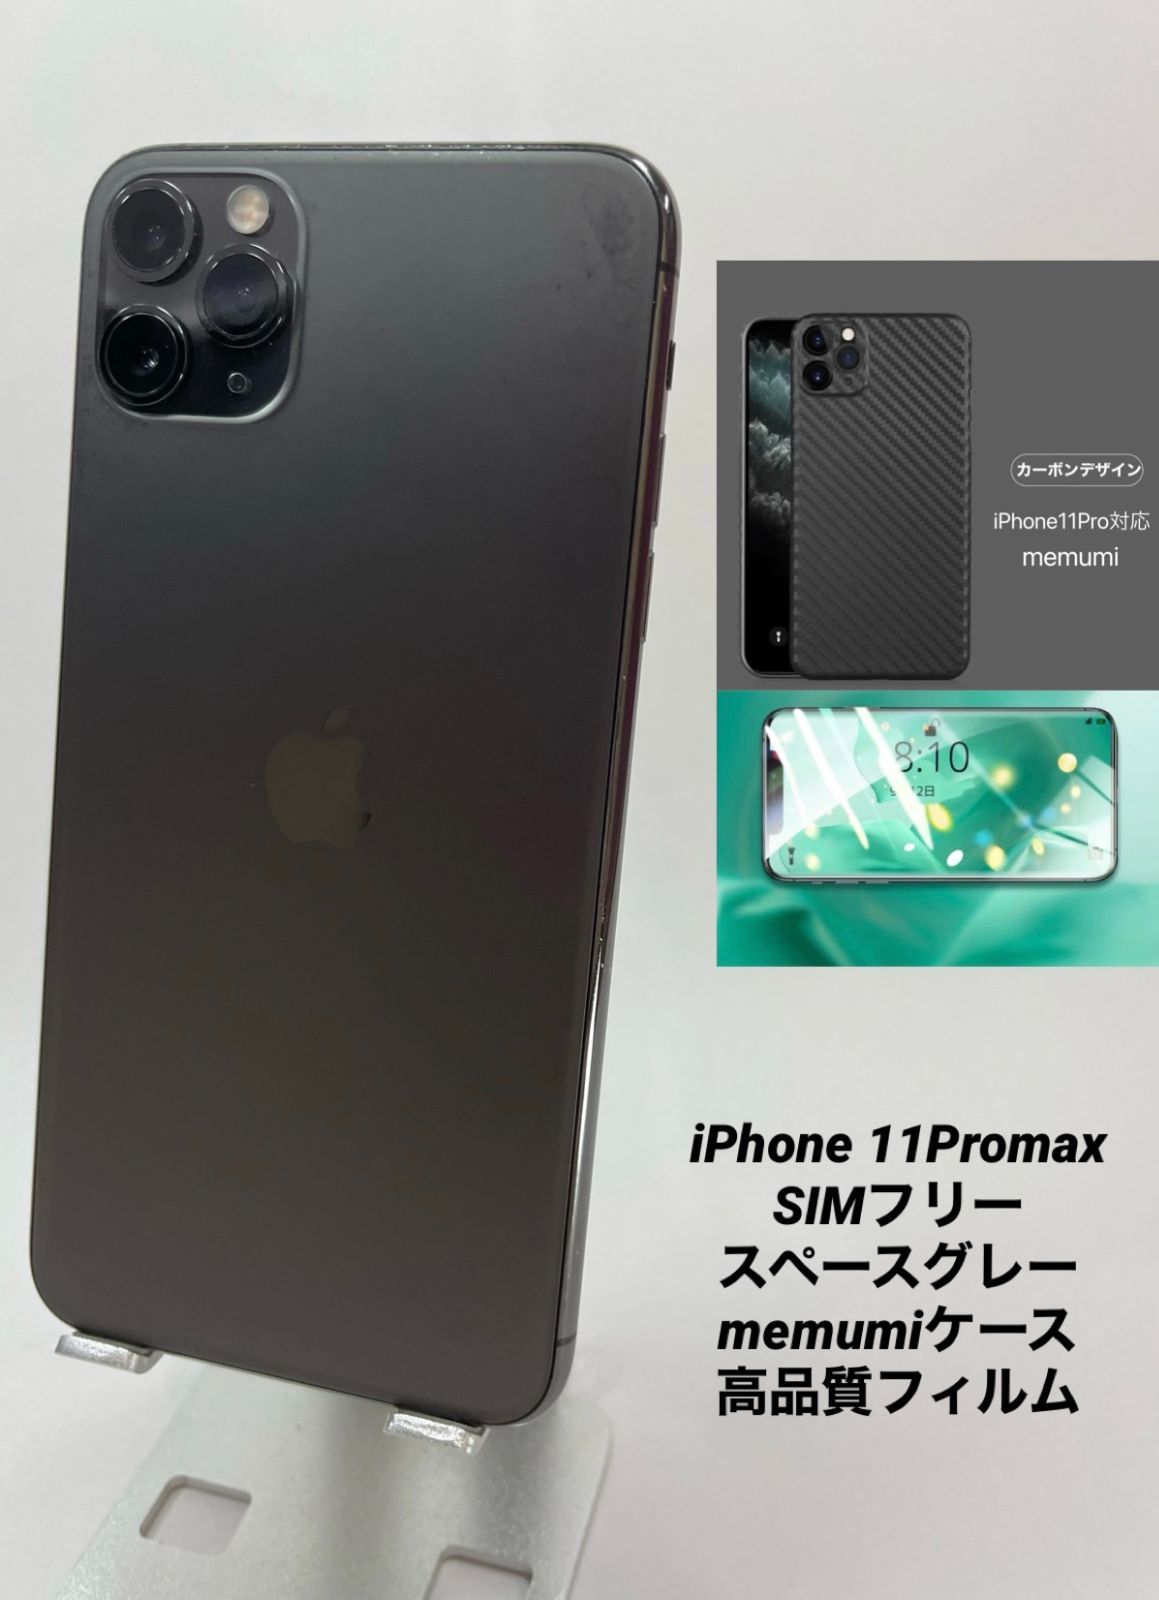 iPhone11Pro 256G space gray バッテリー100% - スマートフォン本体